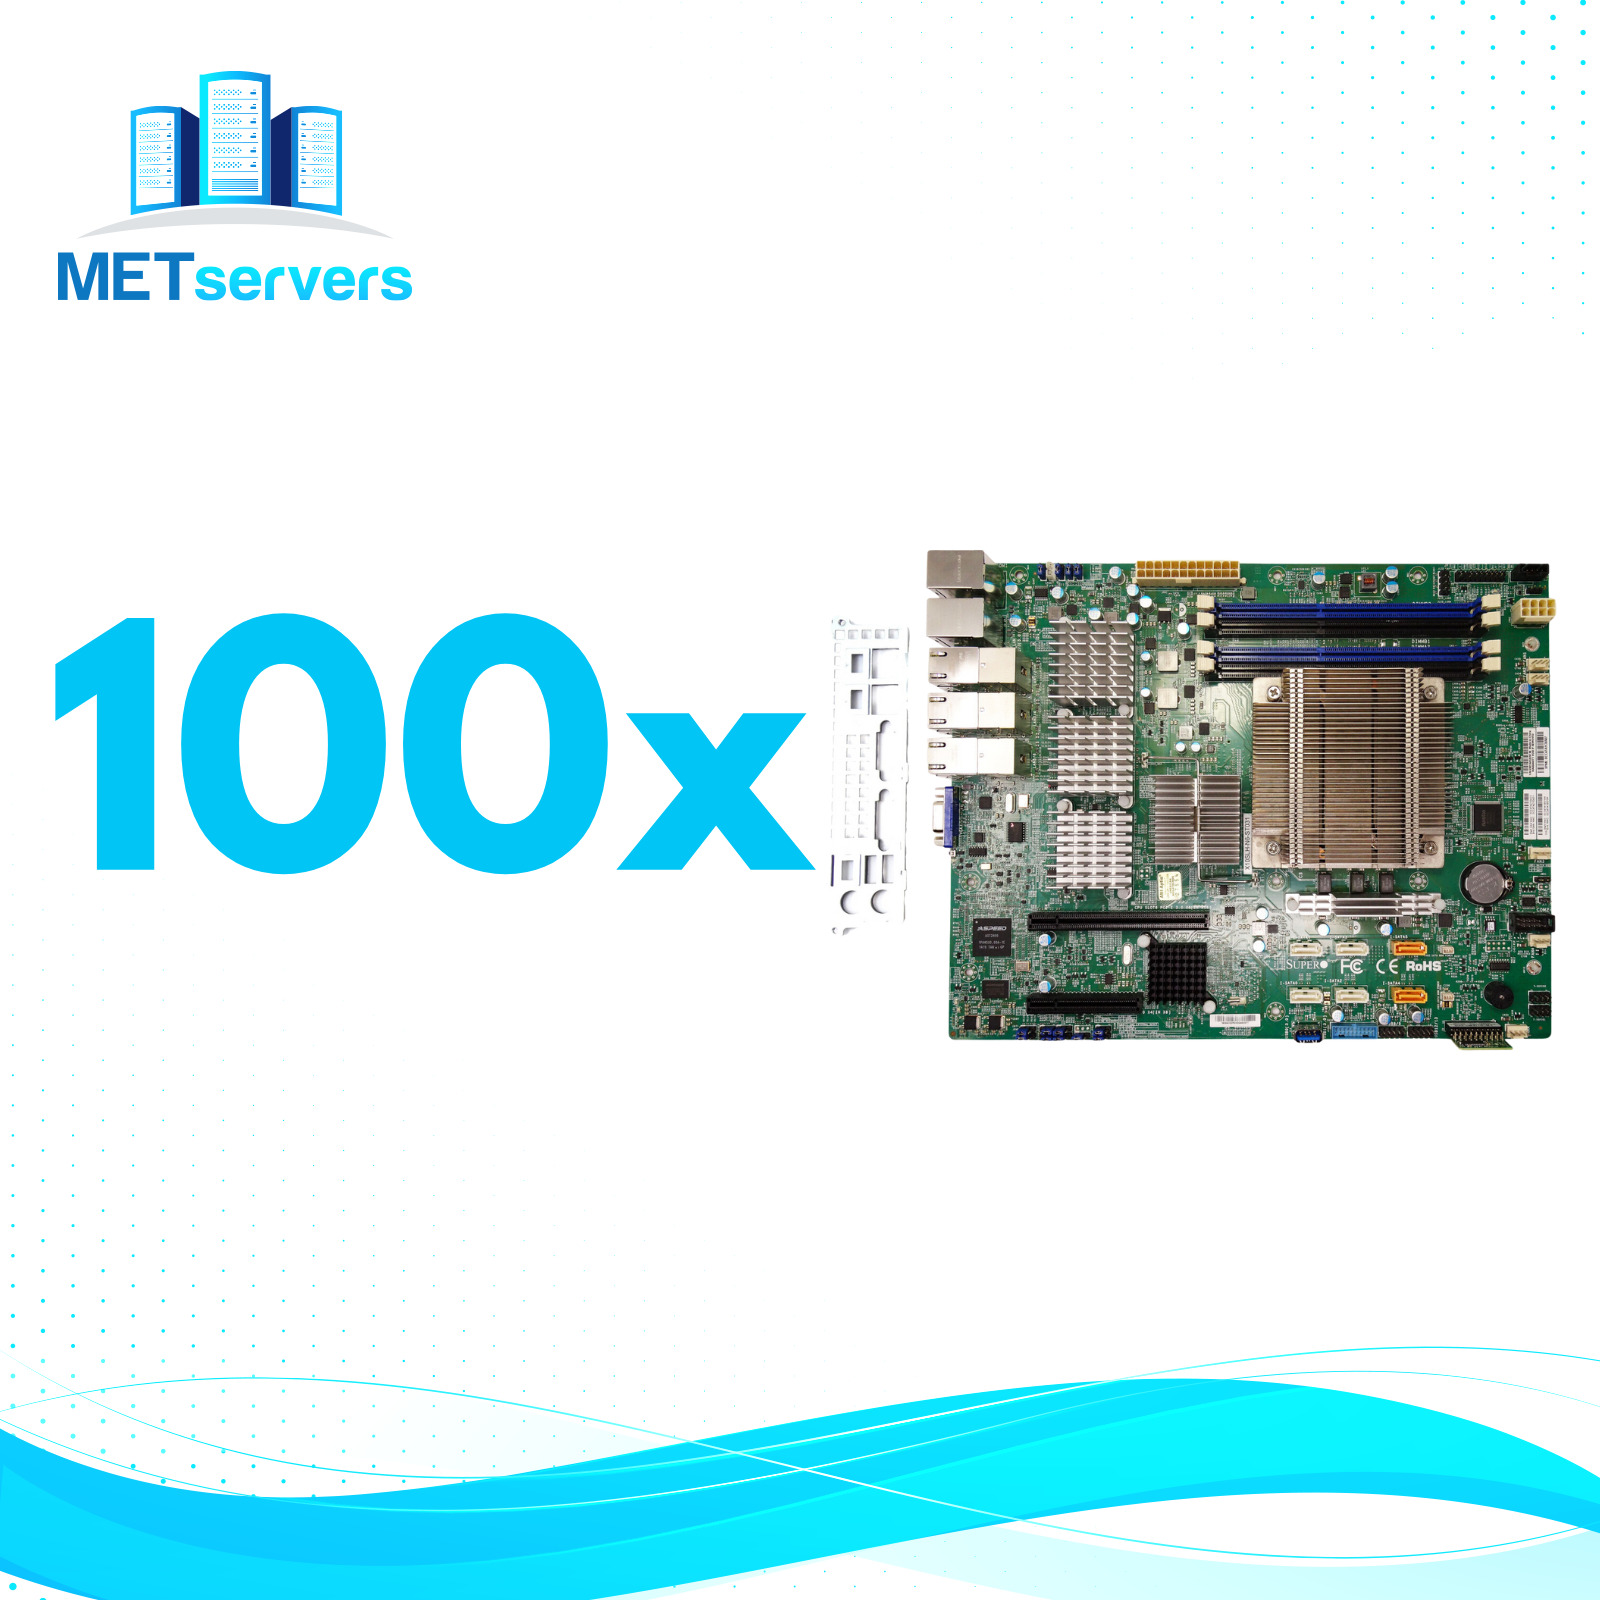 Lot of 100x Supermicro Intel Xeon E3-1200 v3 Mirco-ATX LGA1150 Motherboards